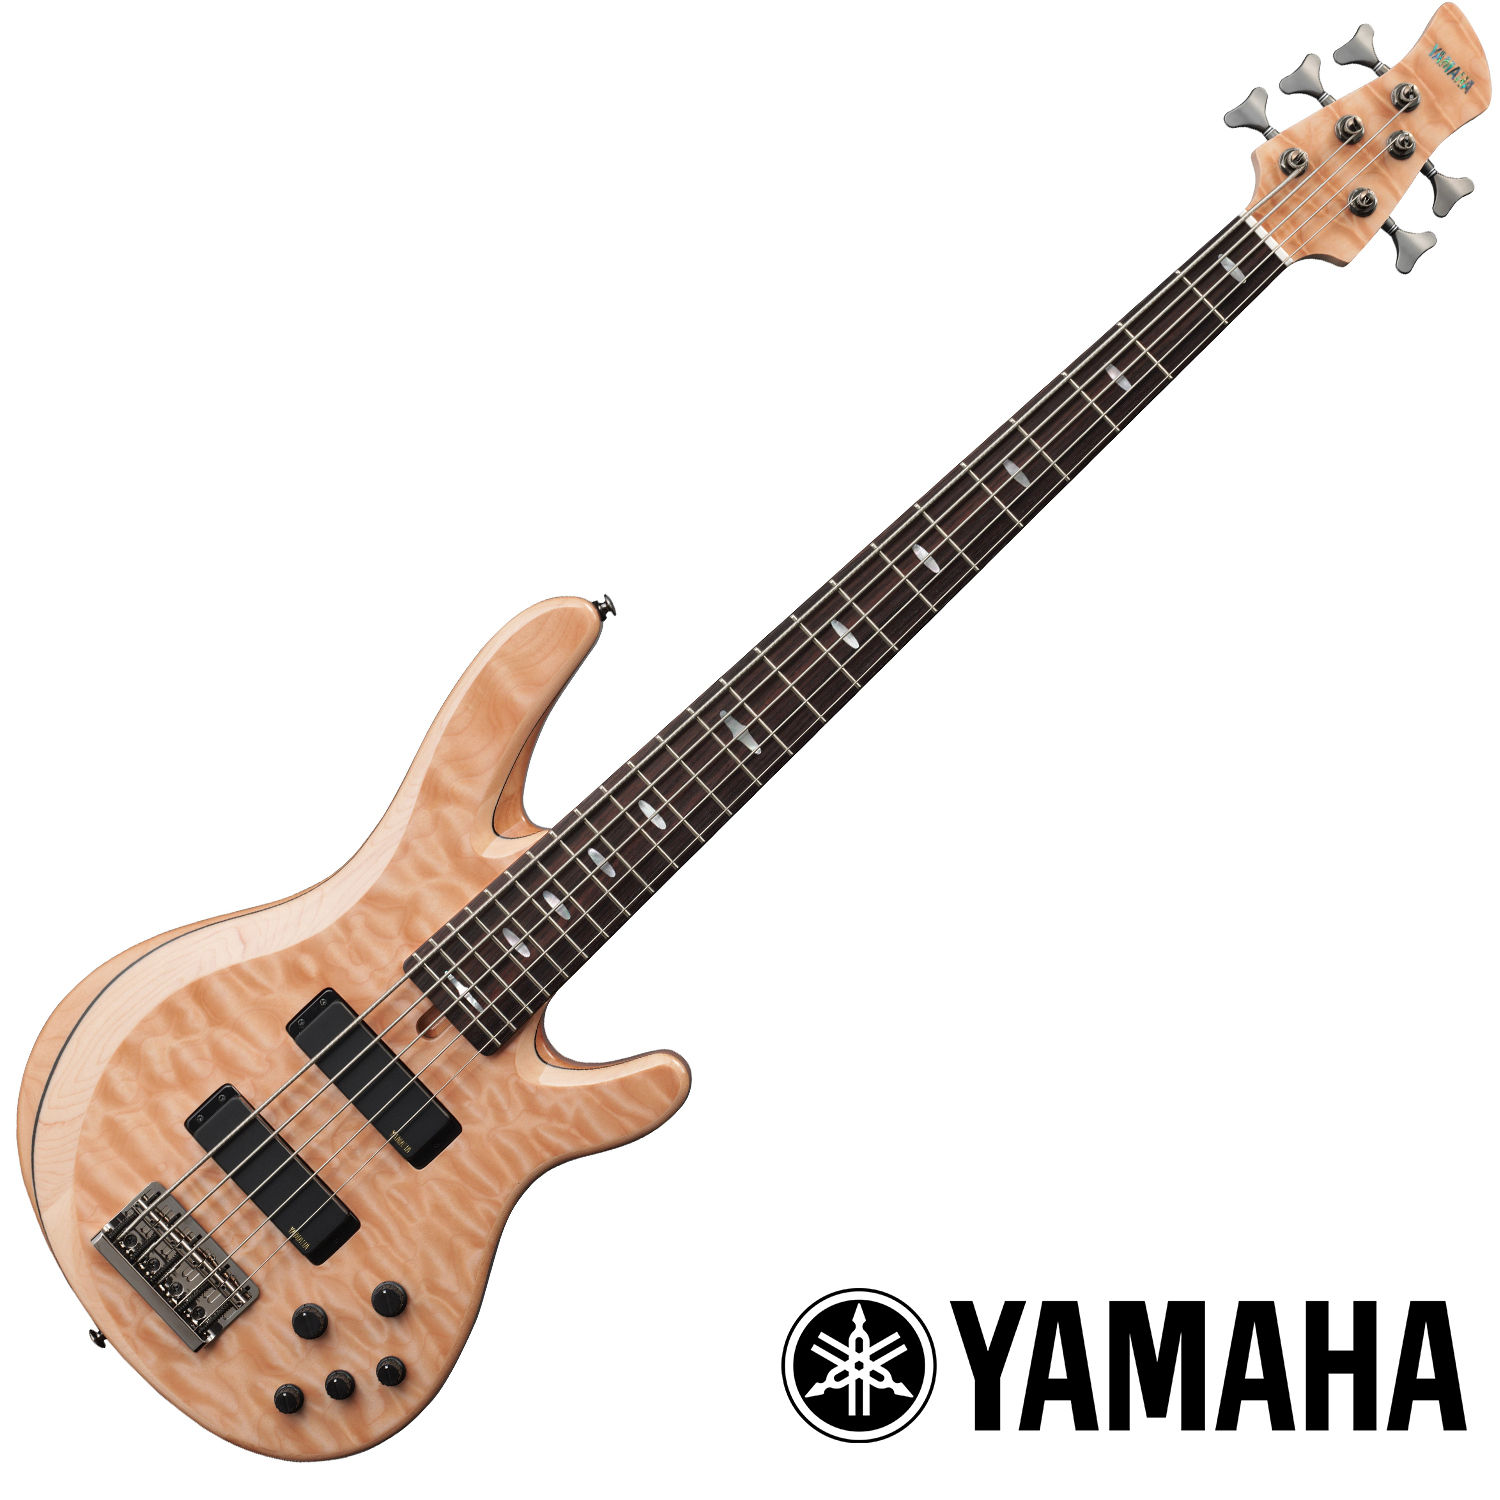 J bass. Yamaha TRB 1004. Yamaha TRB 1005. Бас гитара Yamaha. Ямаха бас гитара 4 струны.